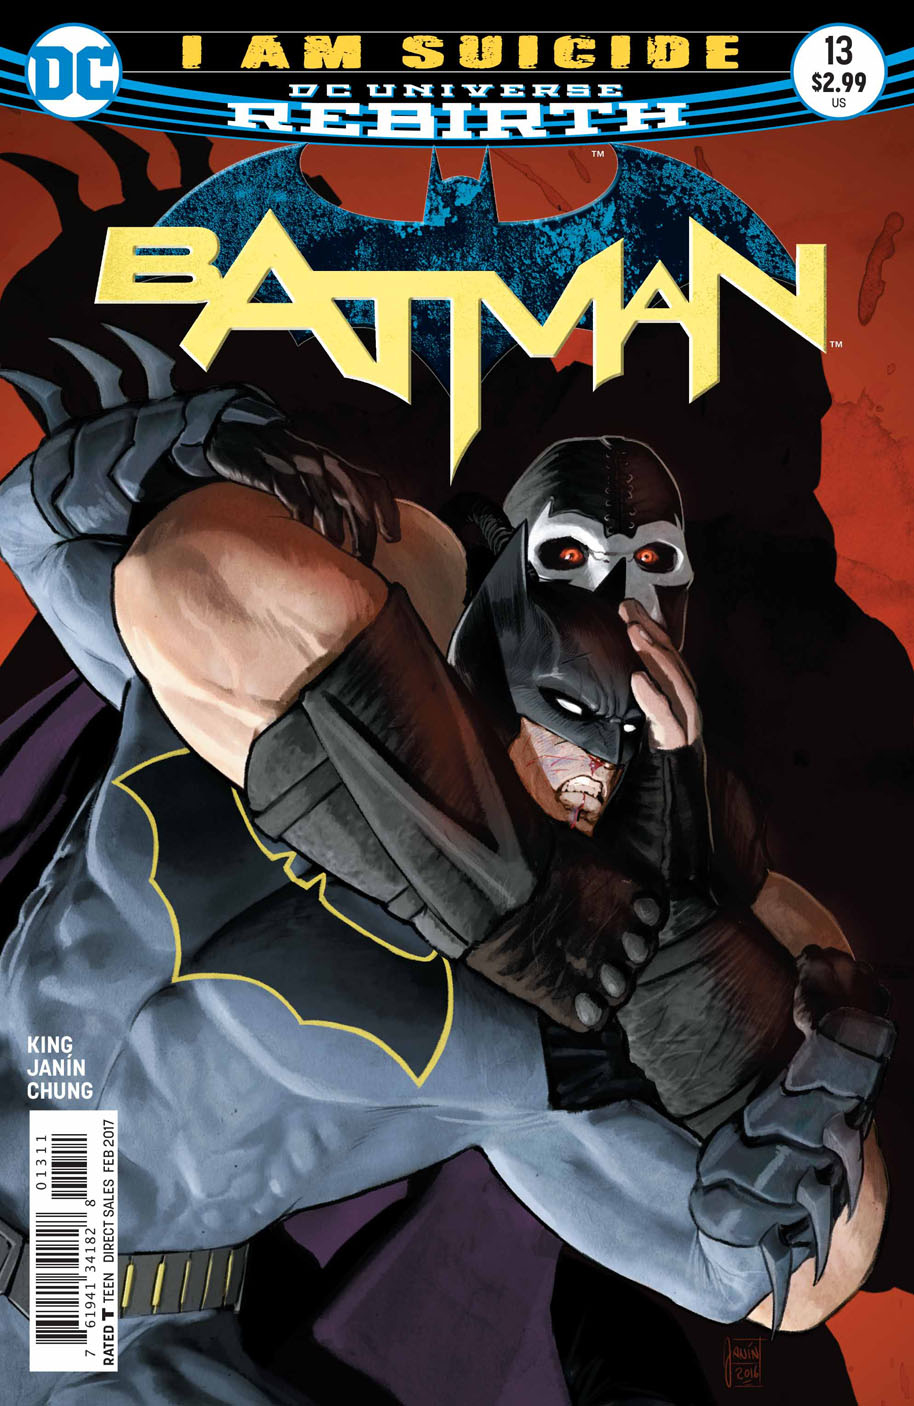 BATMAN #13